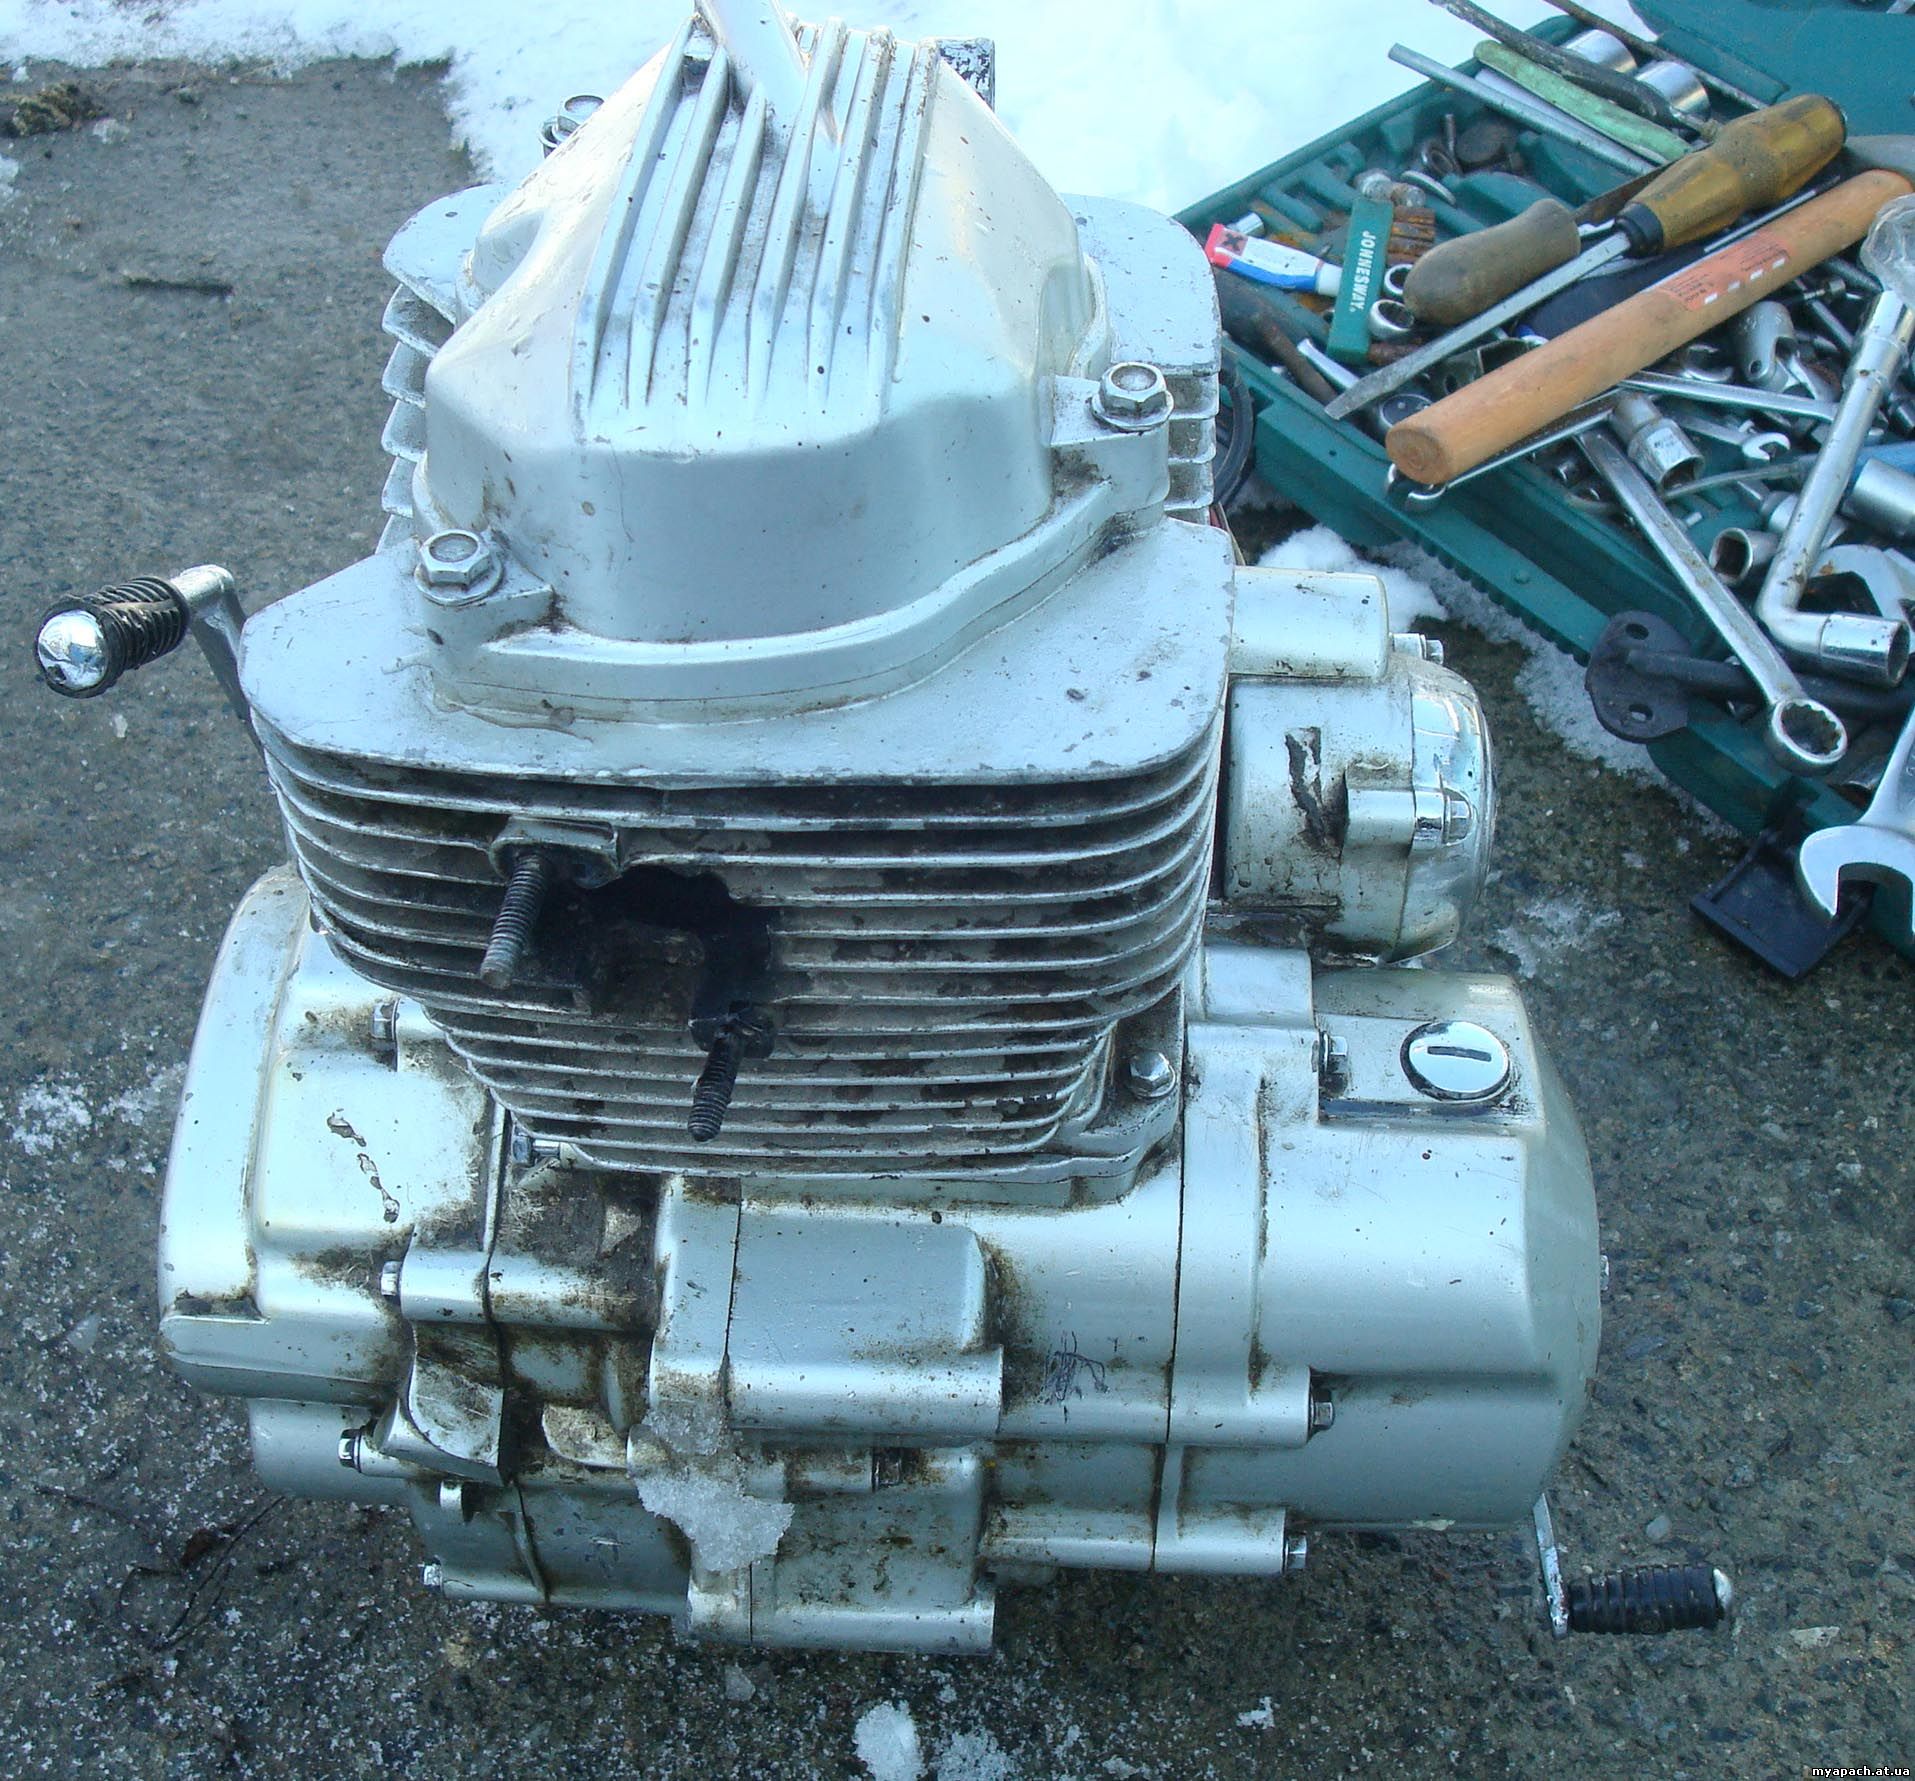 CG 162 FMJ engine